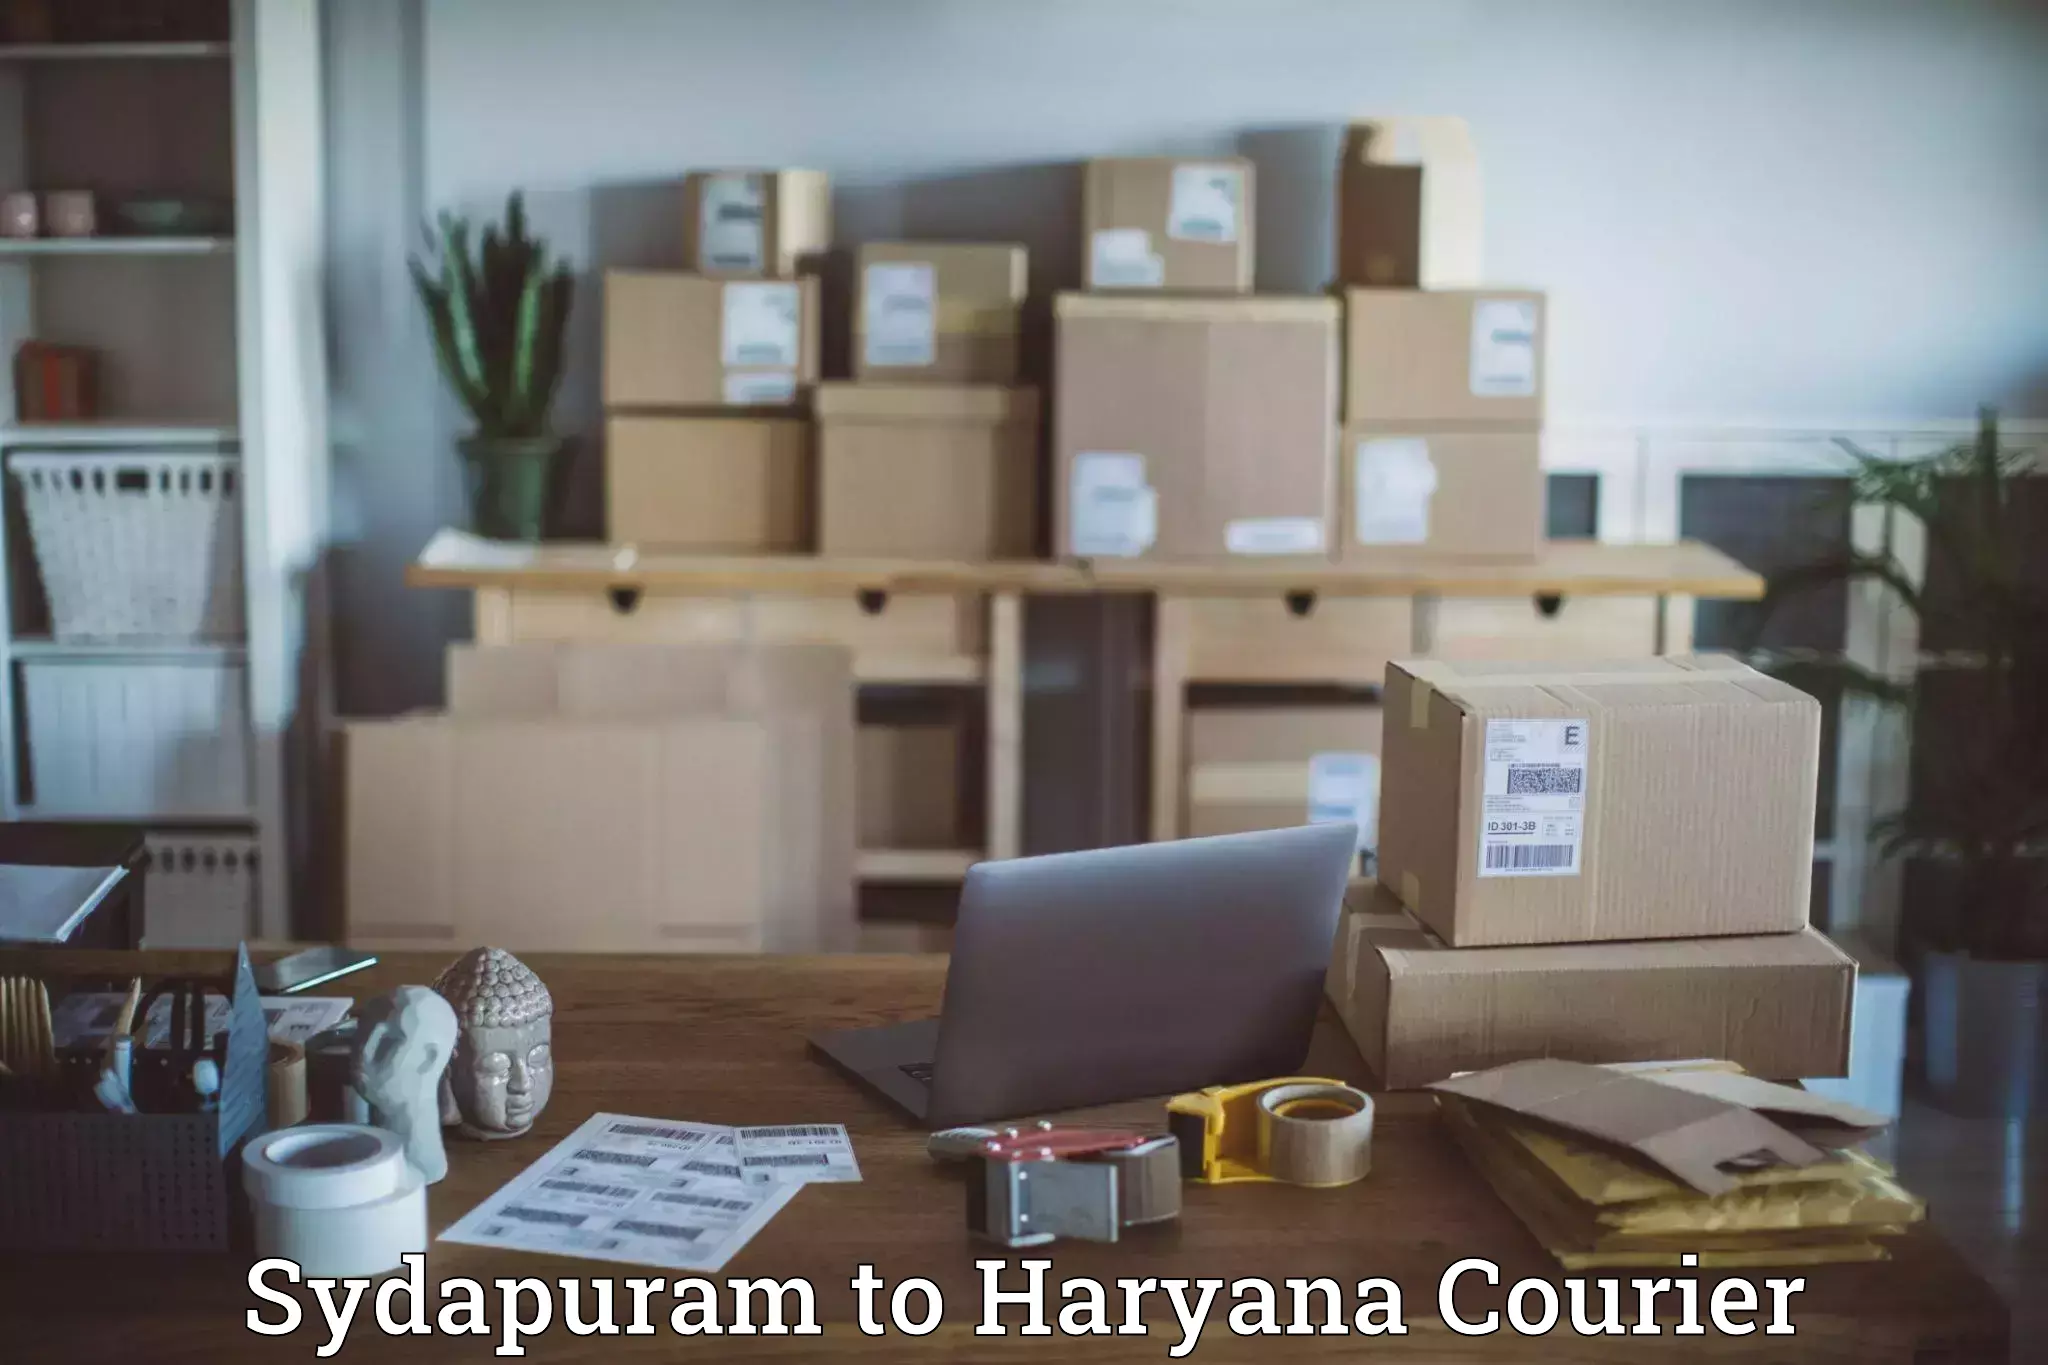 State-of-the-art courier technology Sydapuram to Ambala